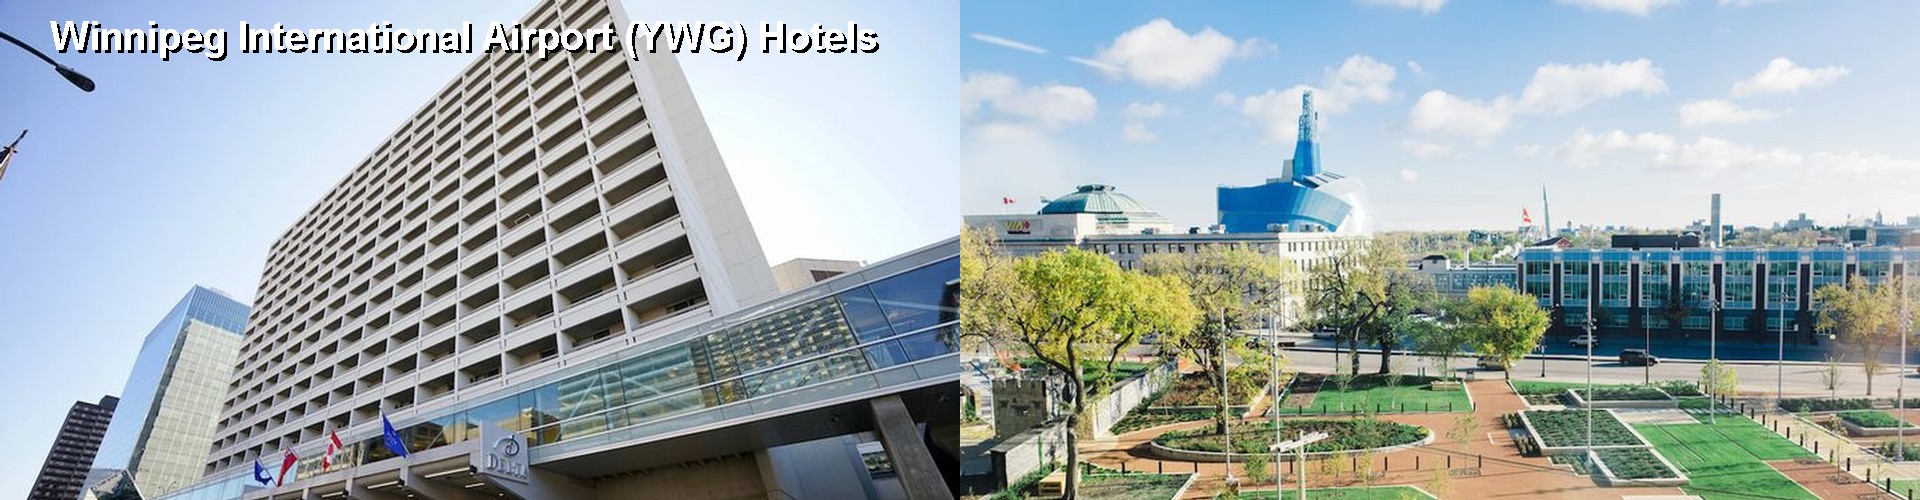 5 Best Hotels near Winnipeg International Airport (YWG)